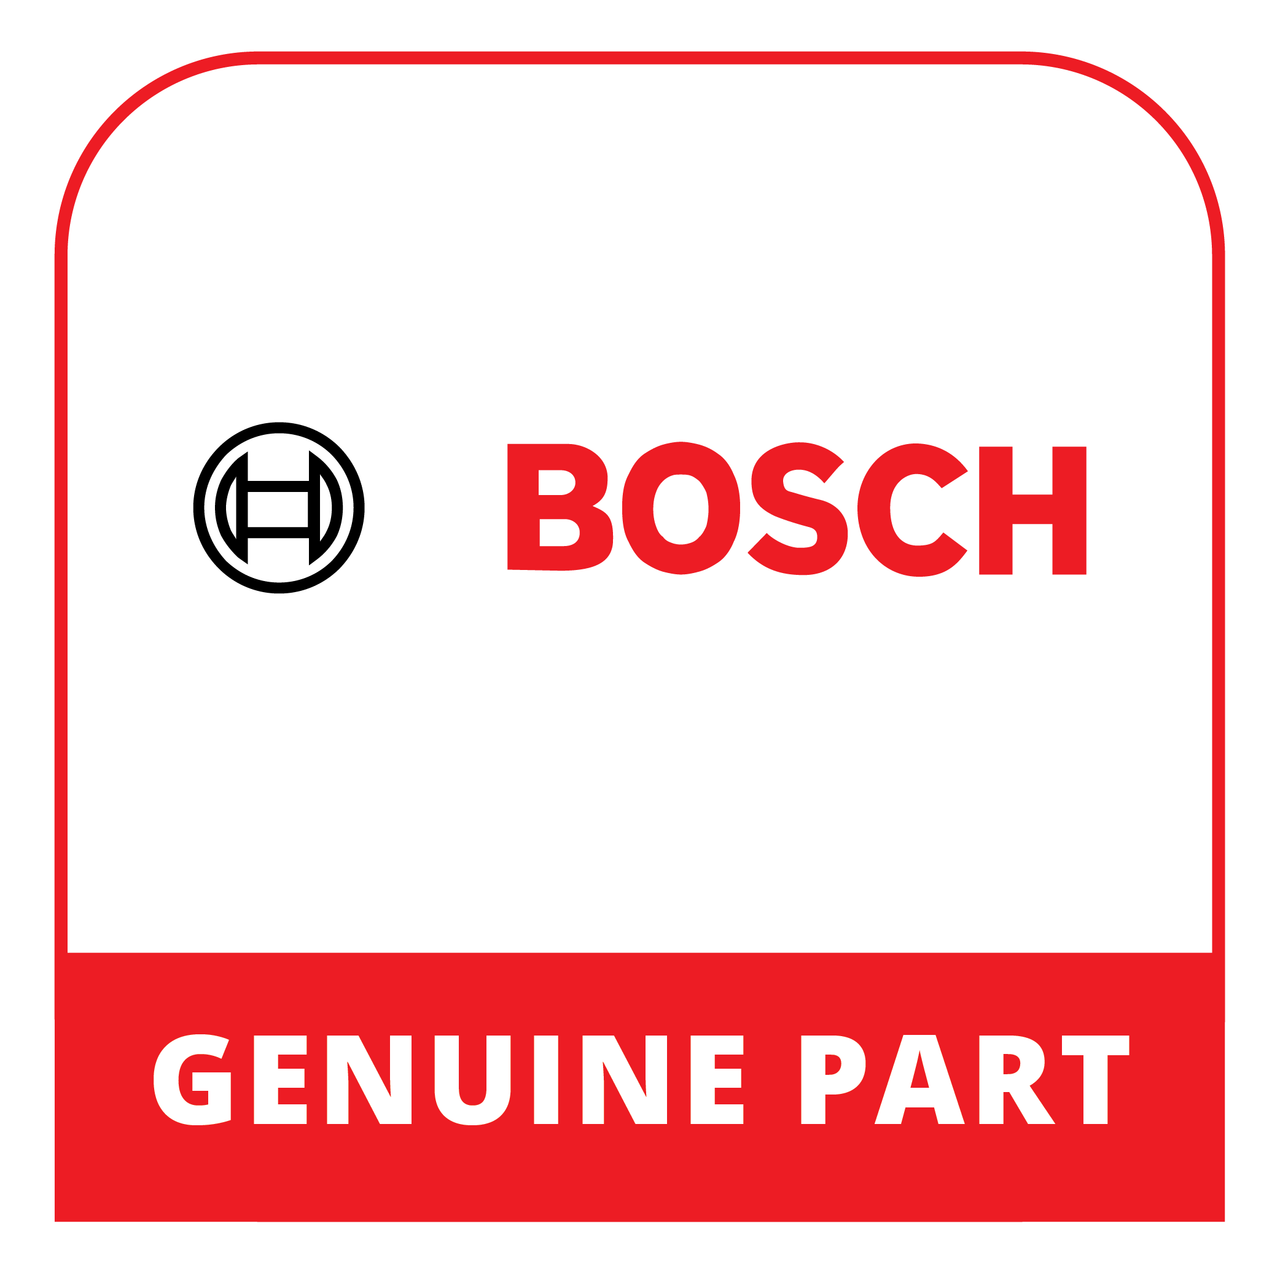 Bosch (Thermador) 20000163 - Worktop - Genuine Bosch (Thermador) Part